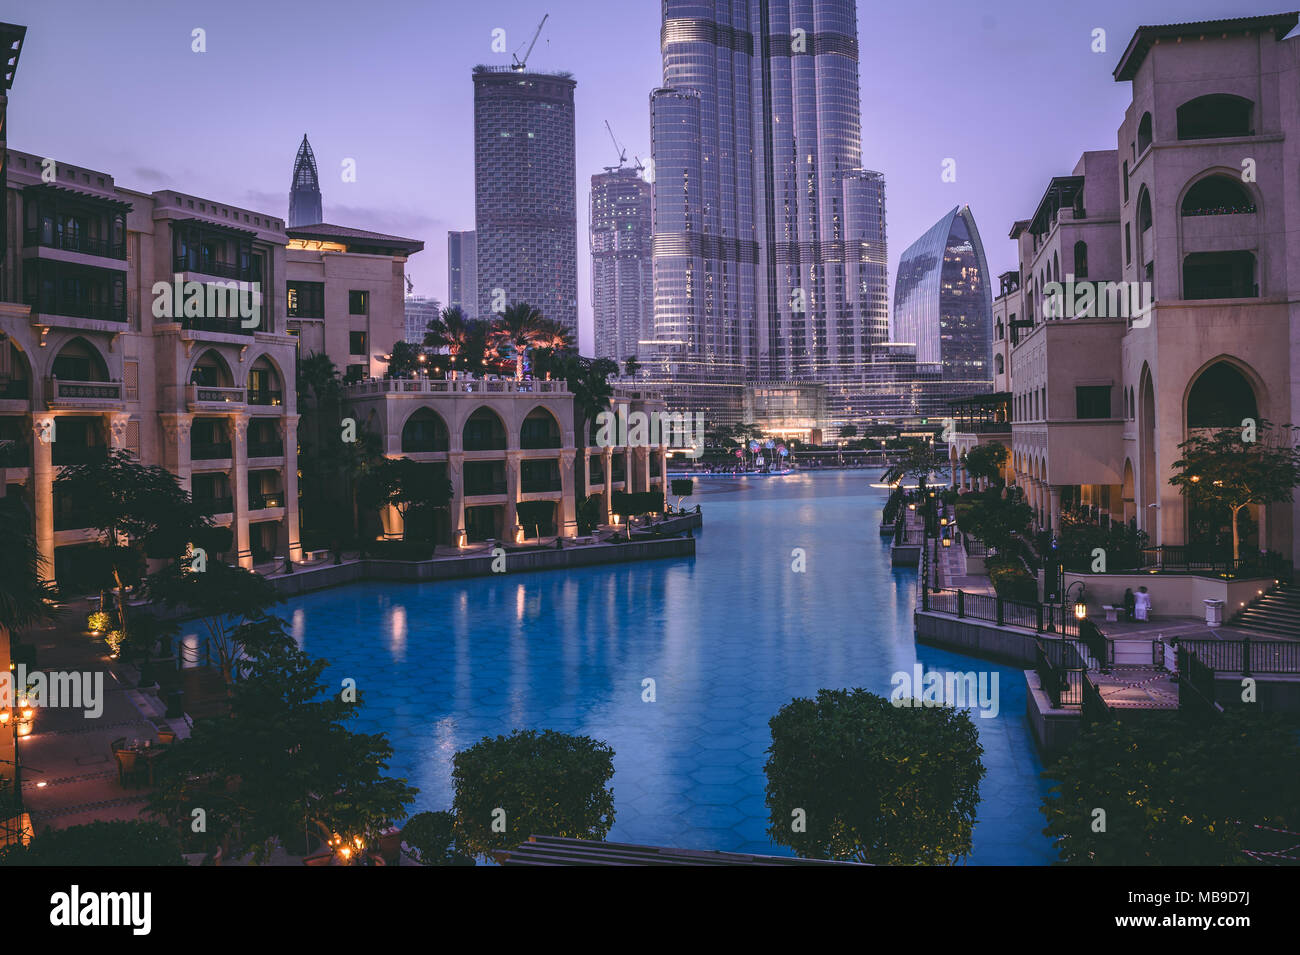 Dubai travel photography trip 2018 Stock Photo